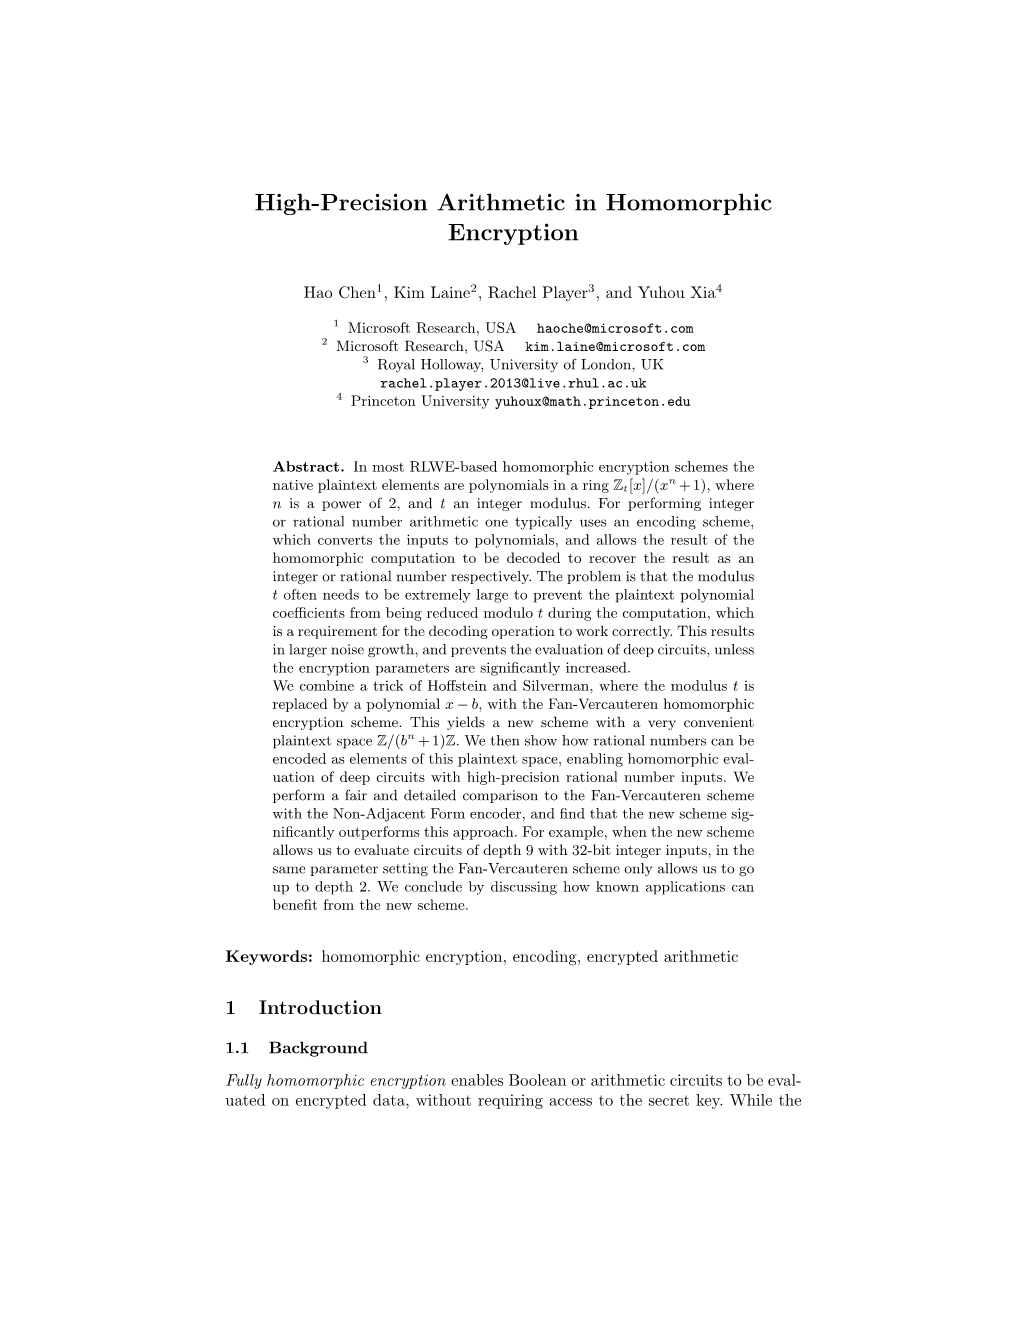 High-Precision Arithmetic in Homomorphic Encryption